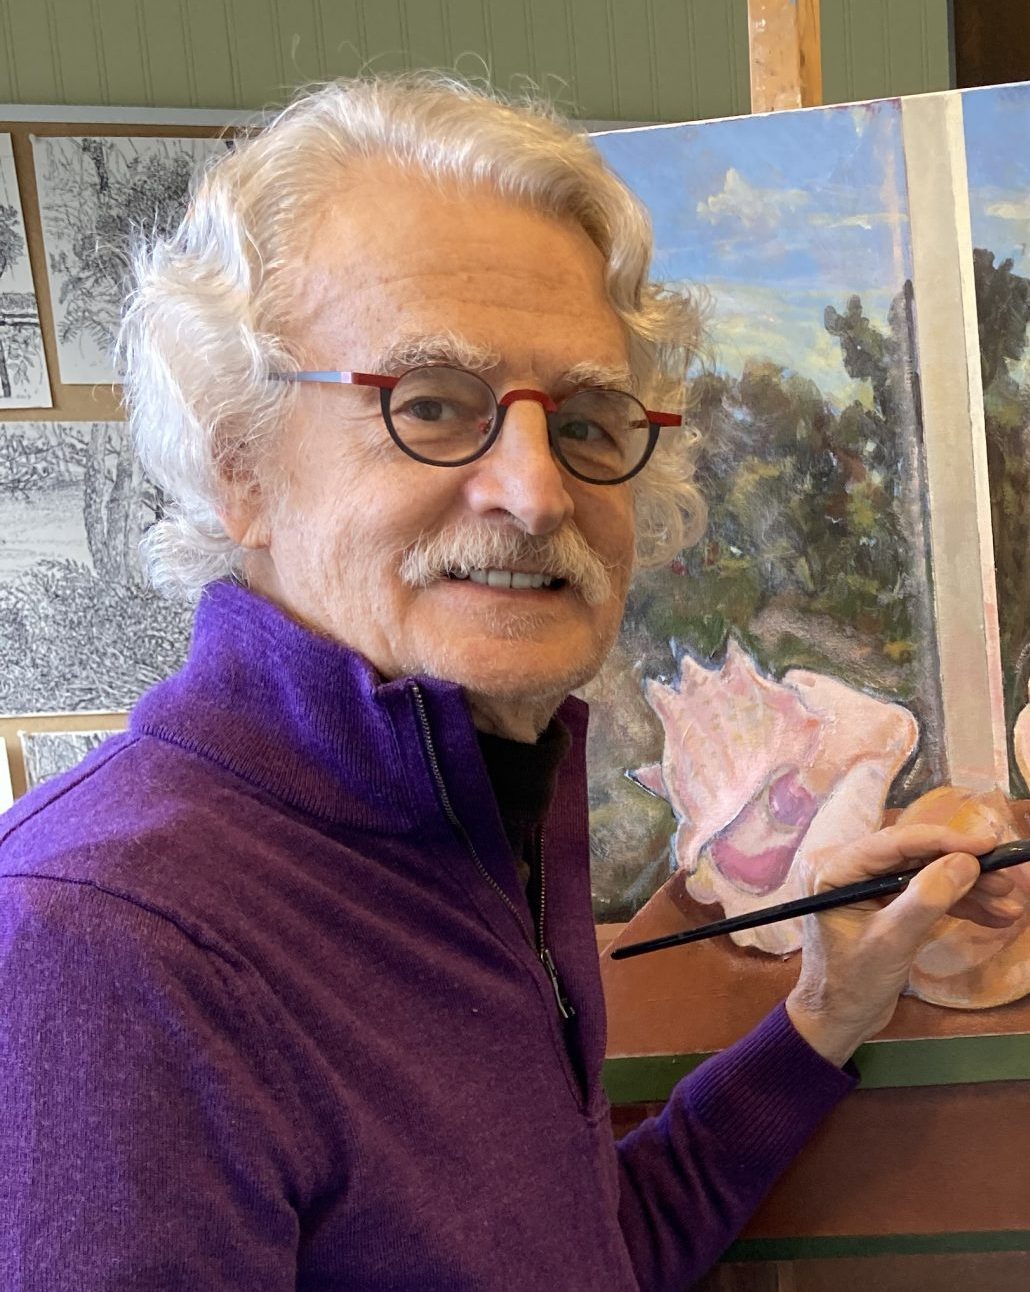 Harry Naar wearing purple quarter zip, painting, looking back and smiling